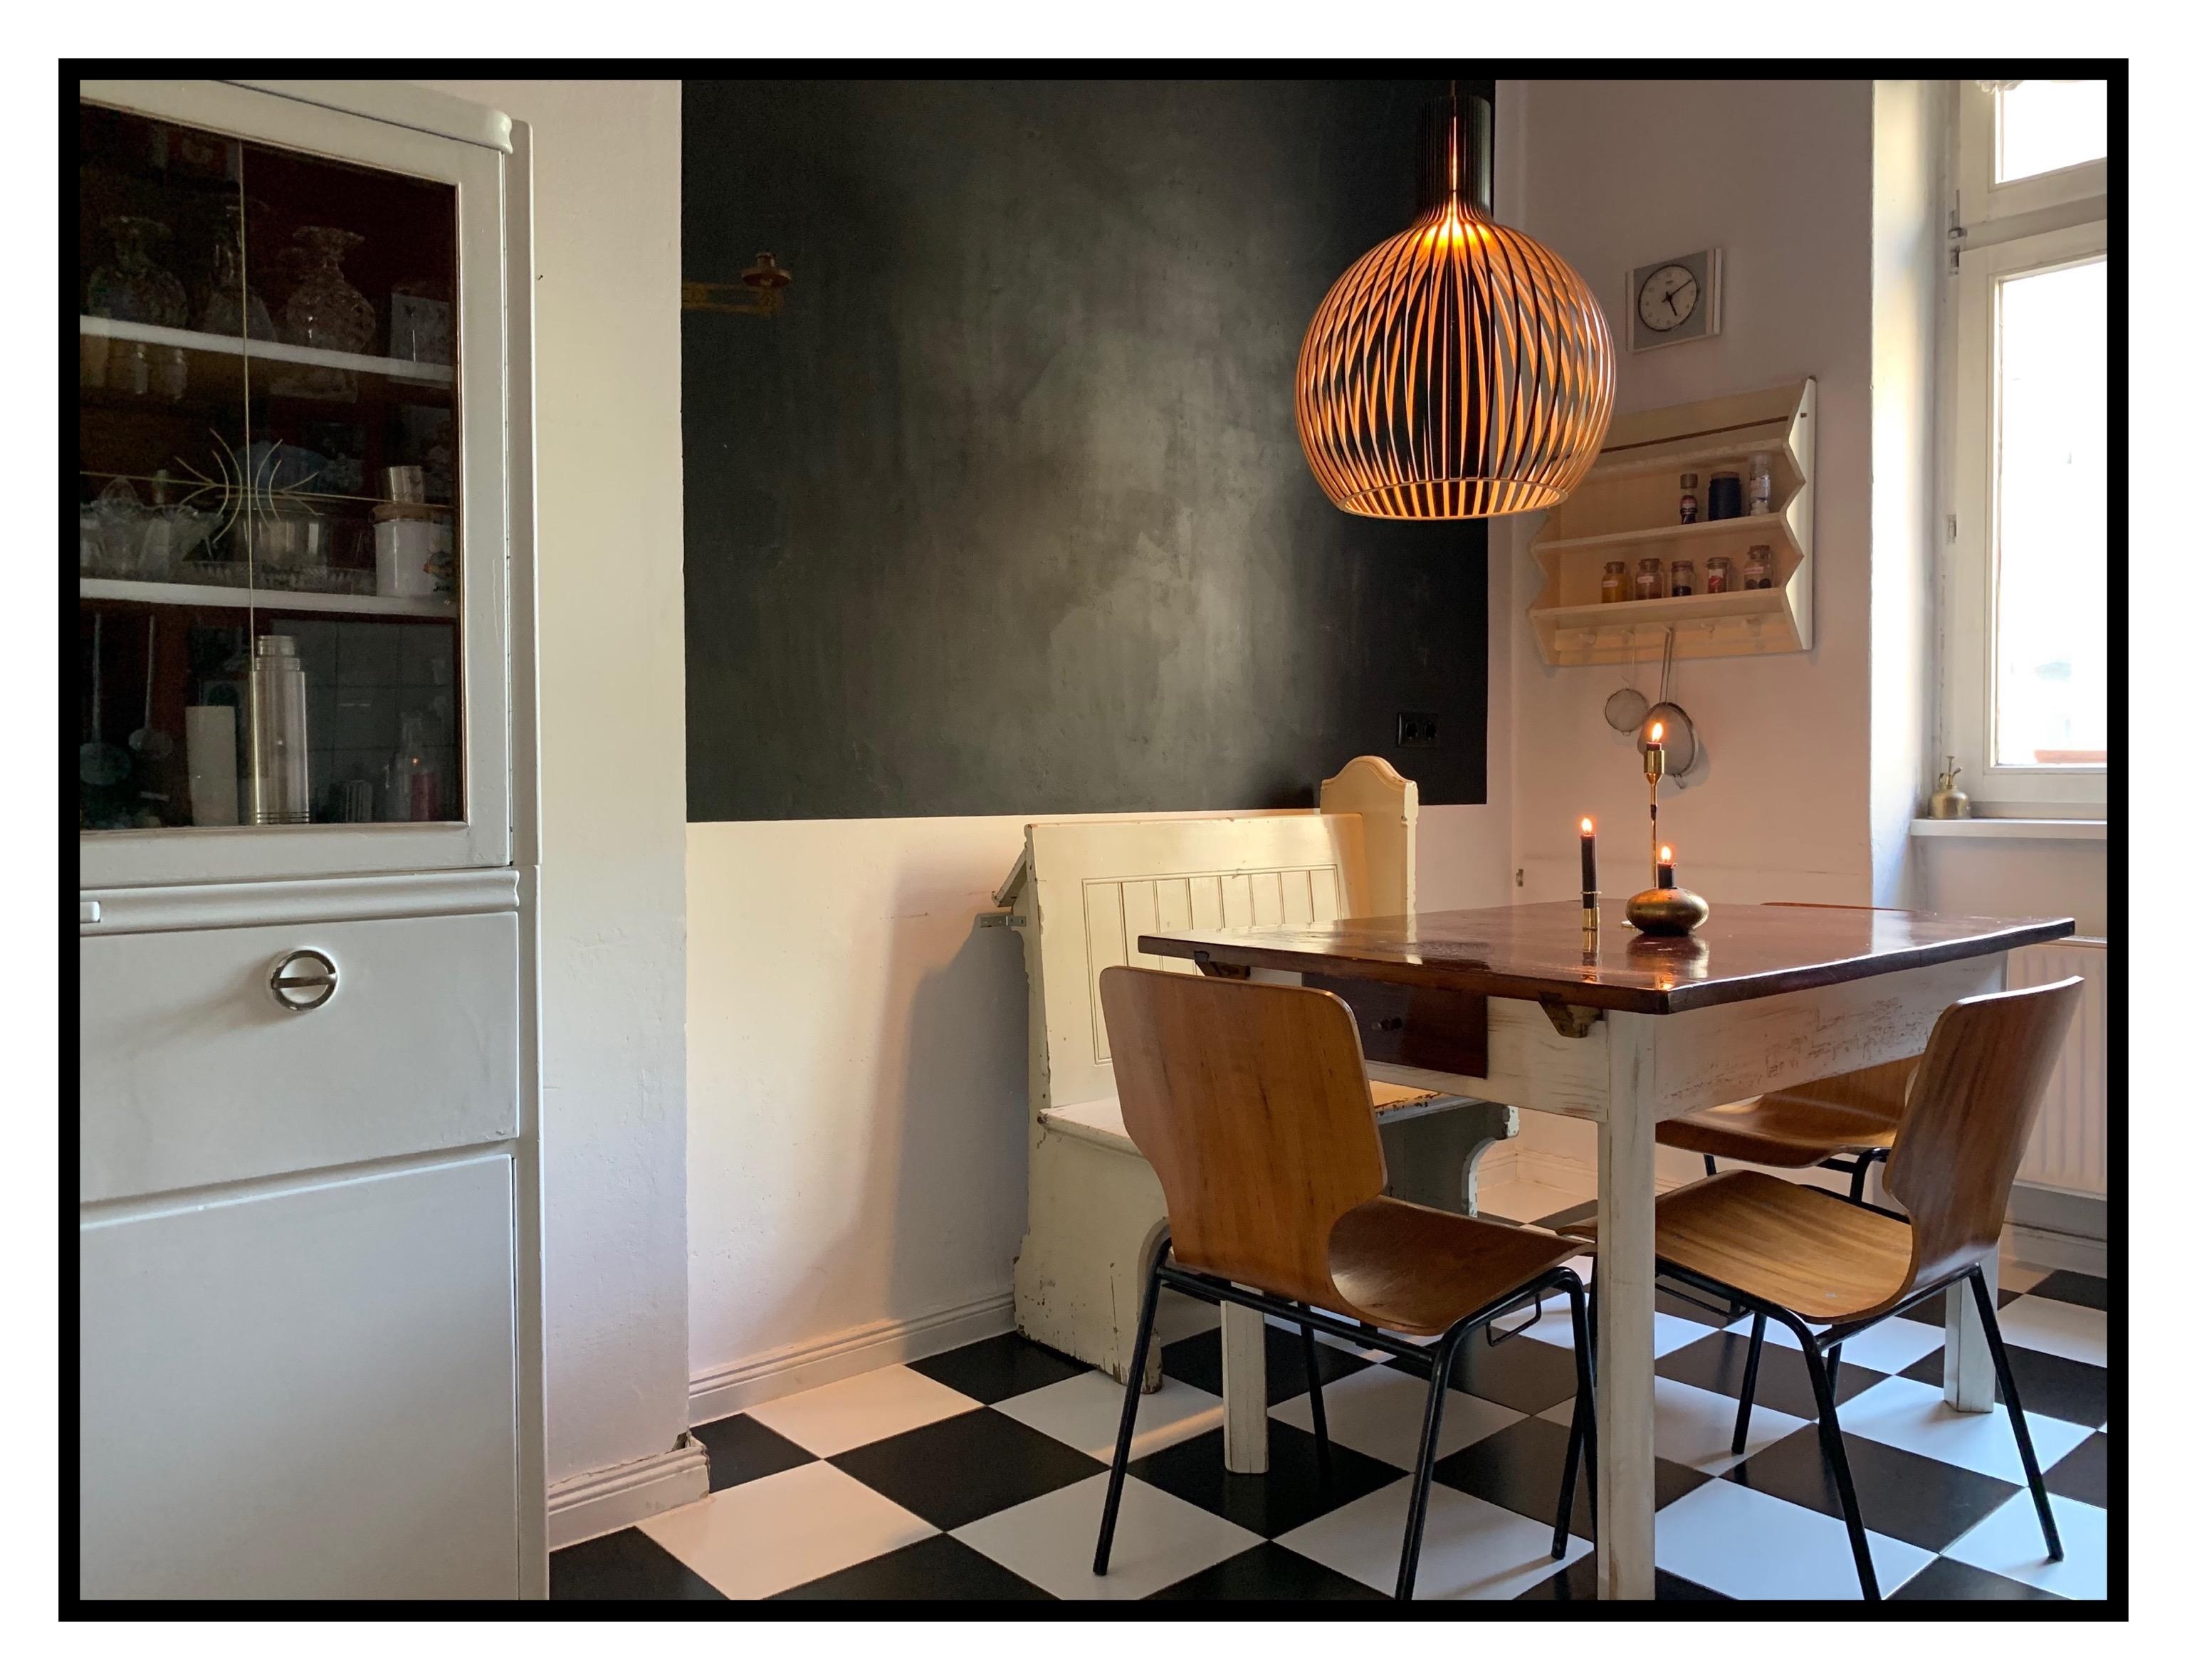 #myhome #home #black #white #interior #vintage #scandinavian #interiorlove #scandinaviandesign #kitchen #instalove 